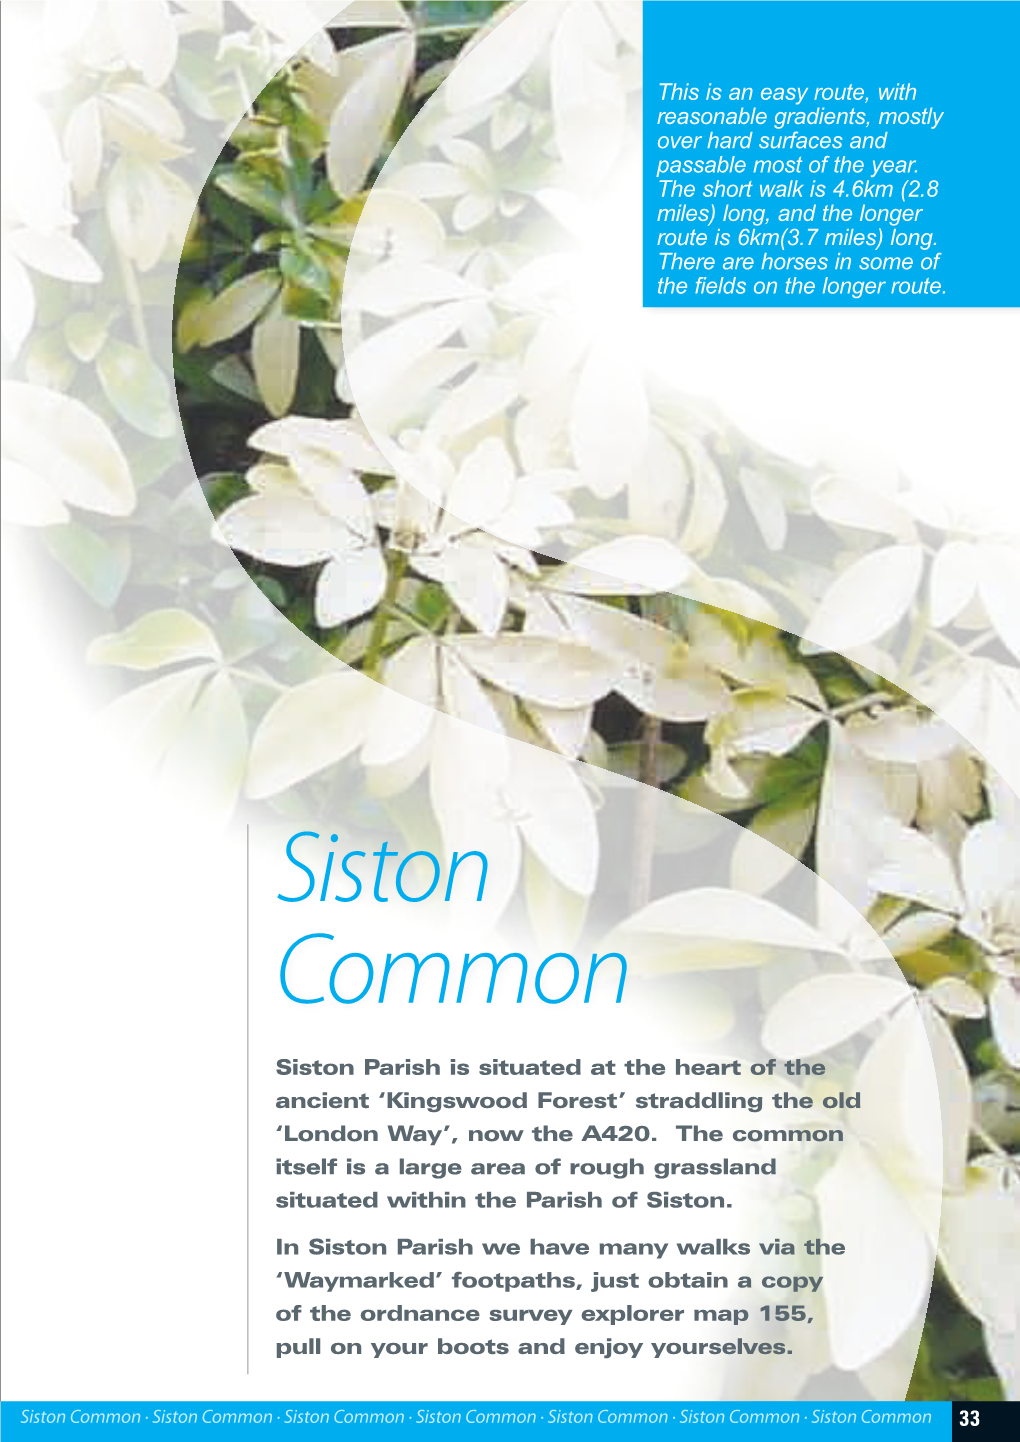 Siston Common